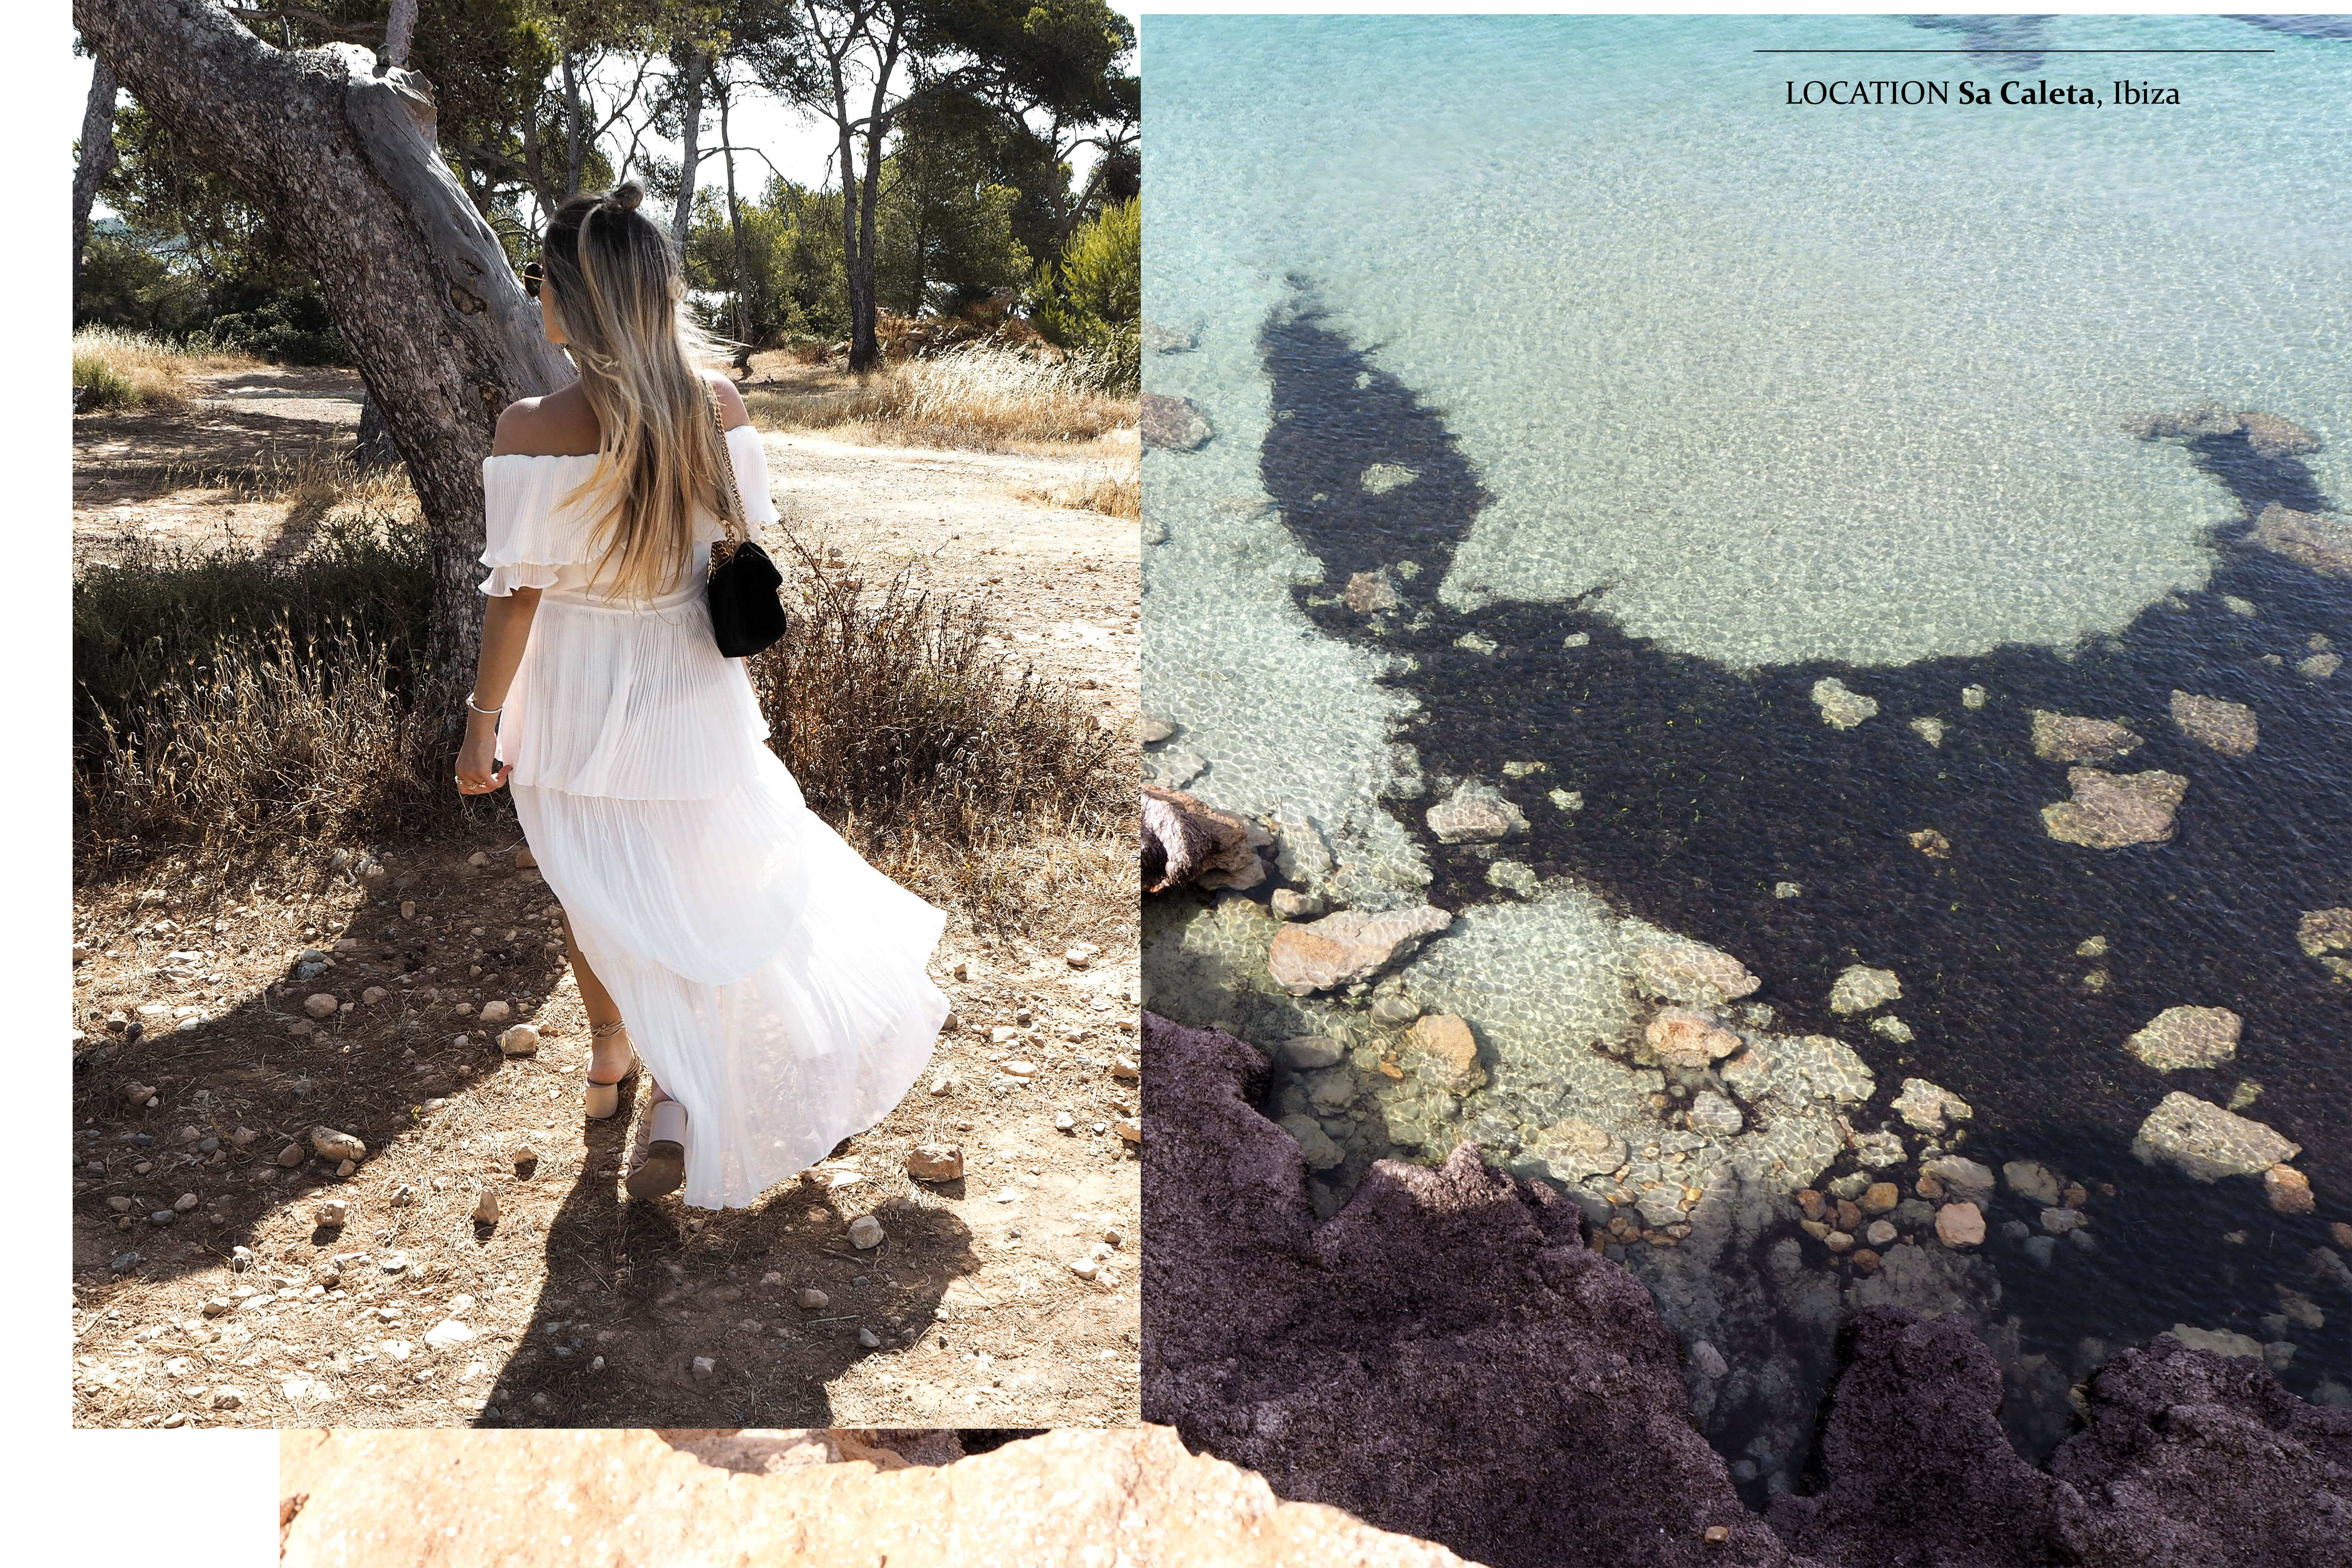 White Summer Dress Gucci Marmont Bag Travelblog Fashionblog Sa caleta Ibiza schönste buchten